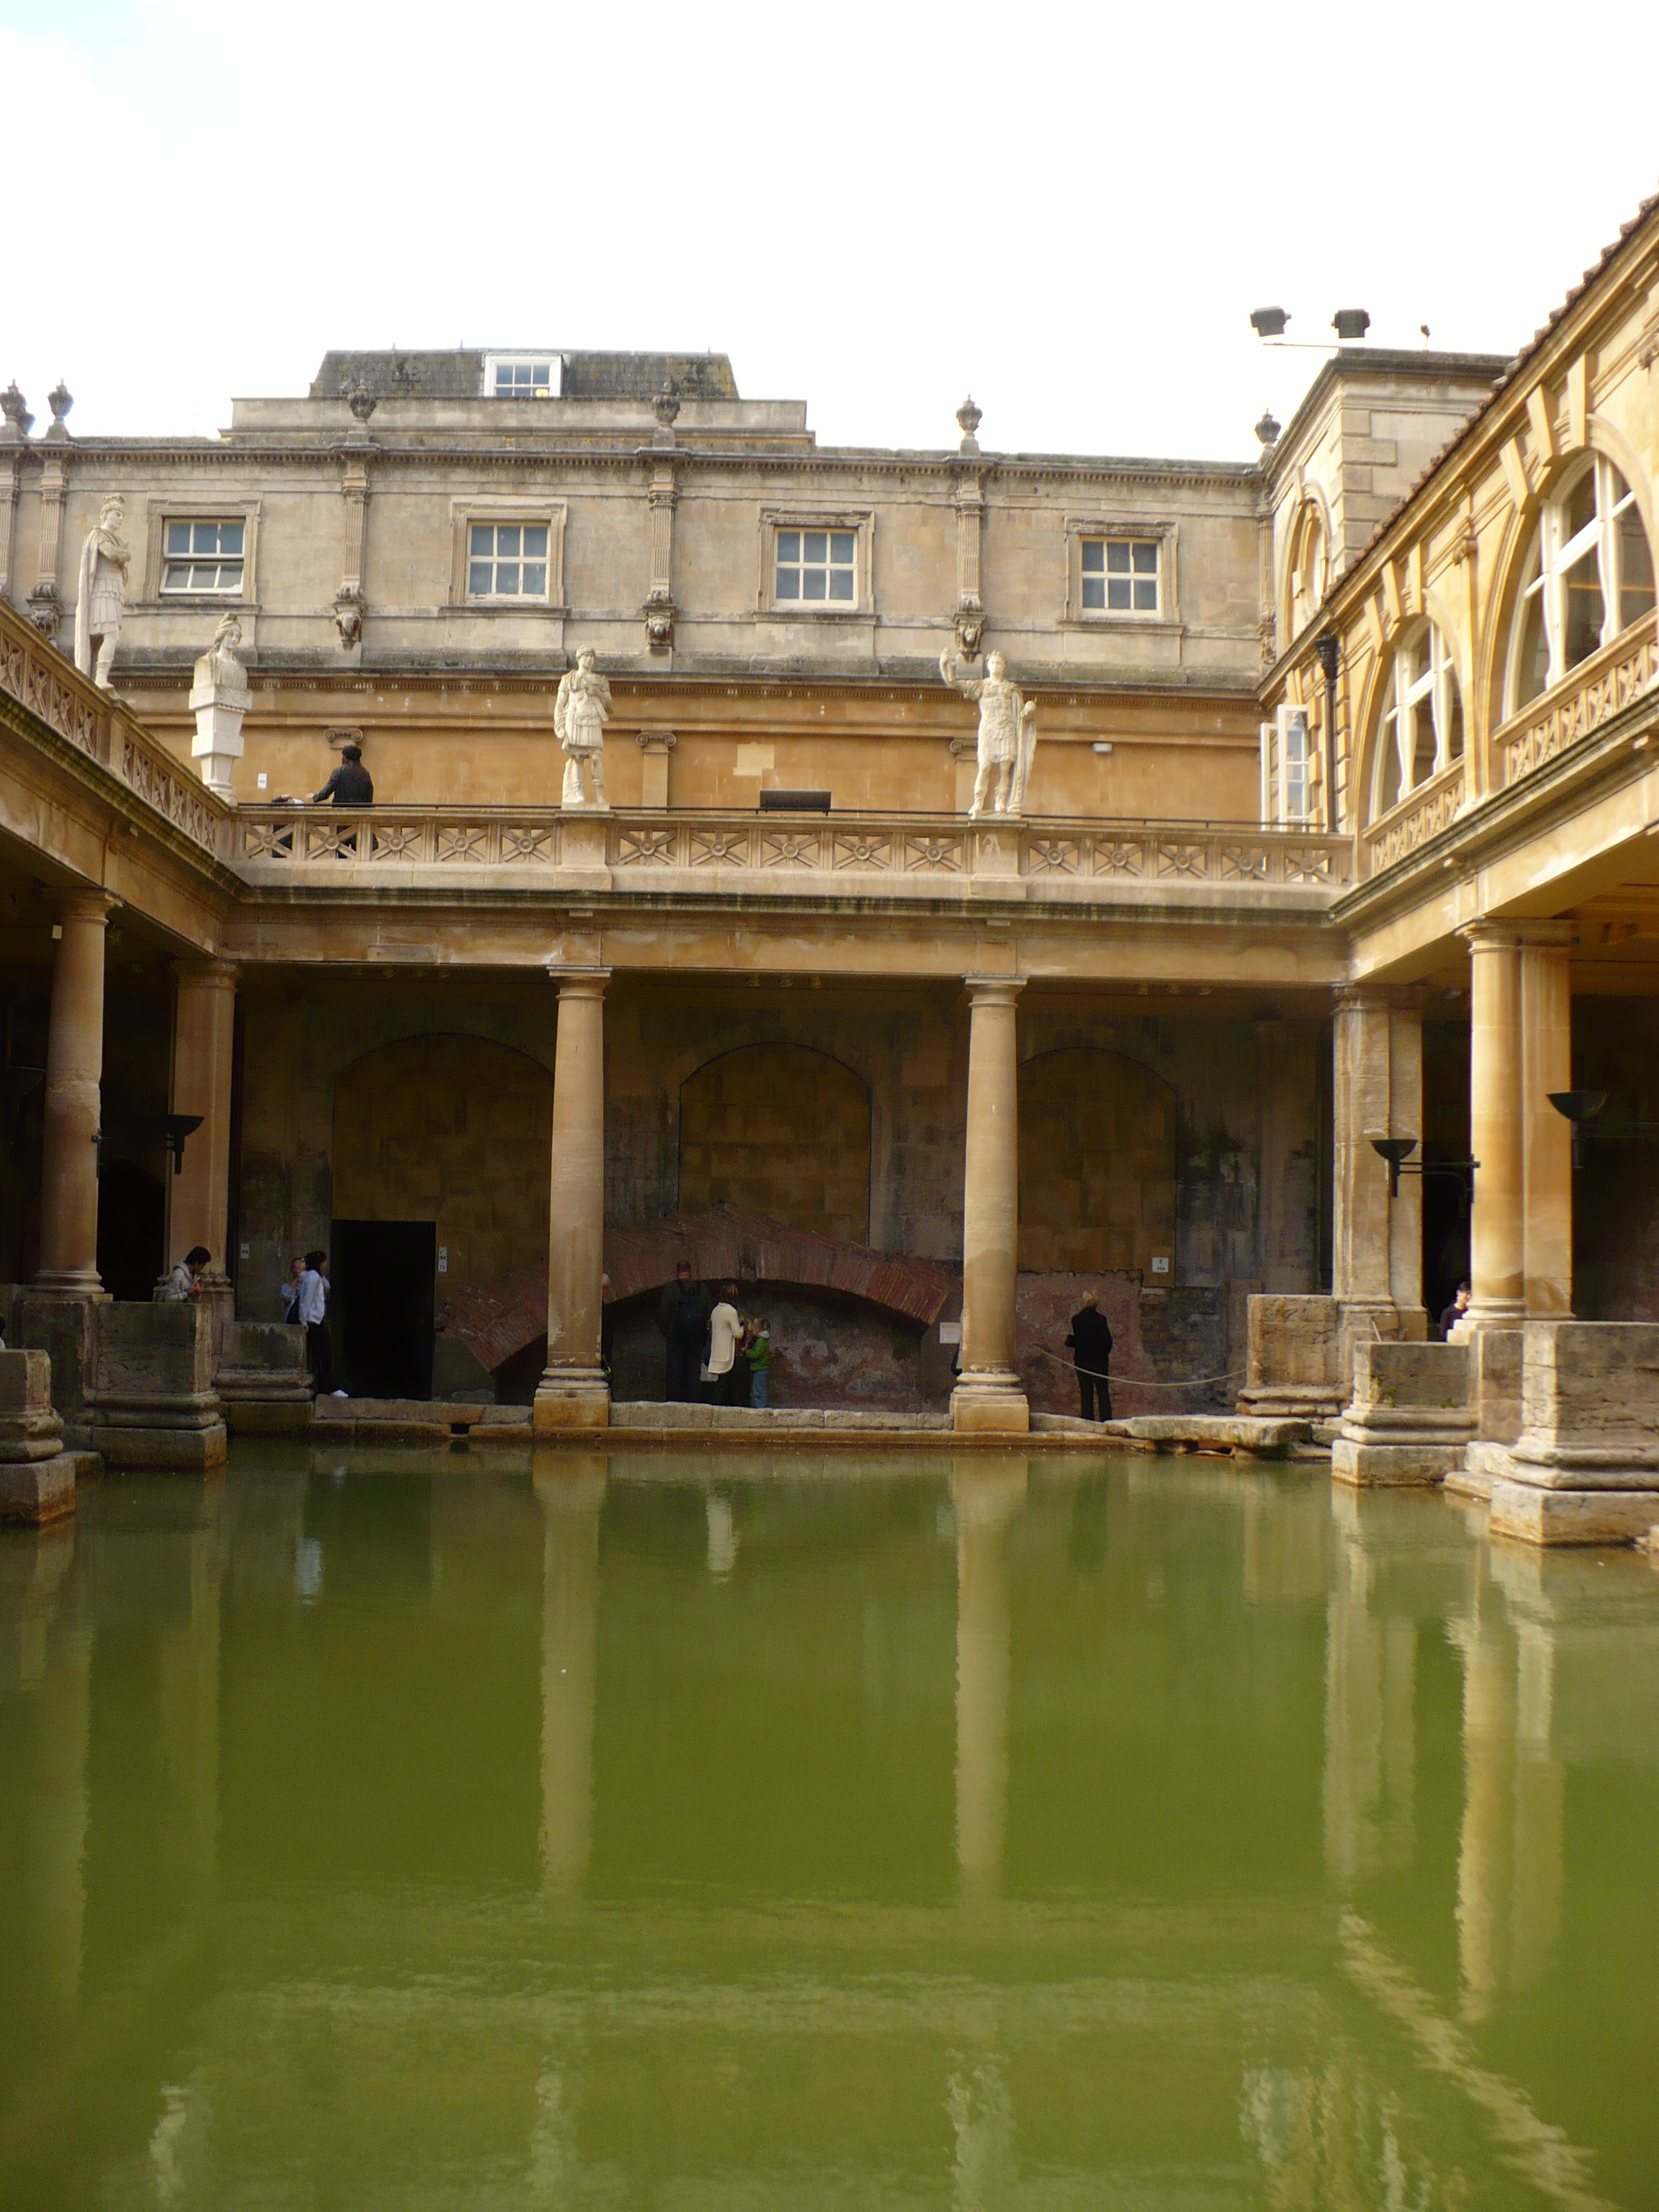 Victorian Baths, at Bath, UK